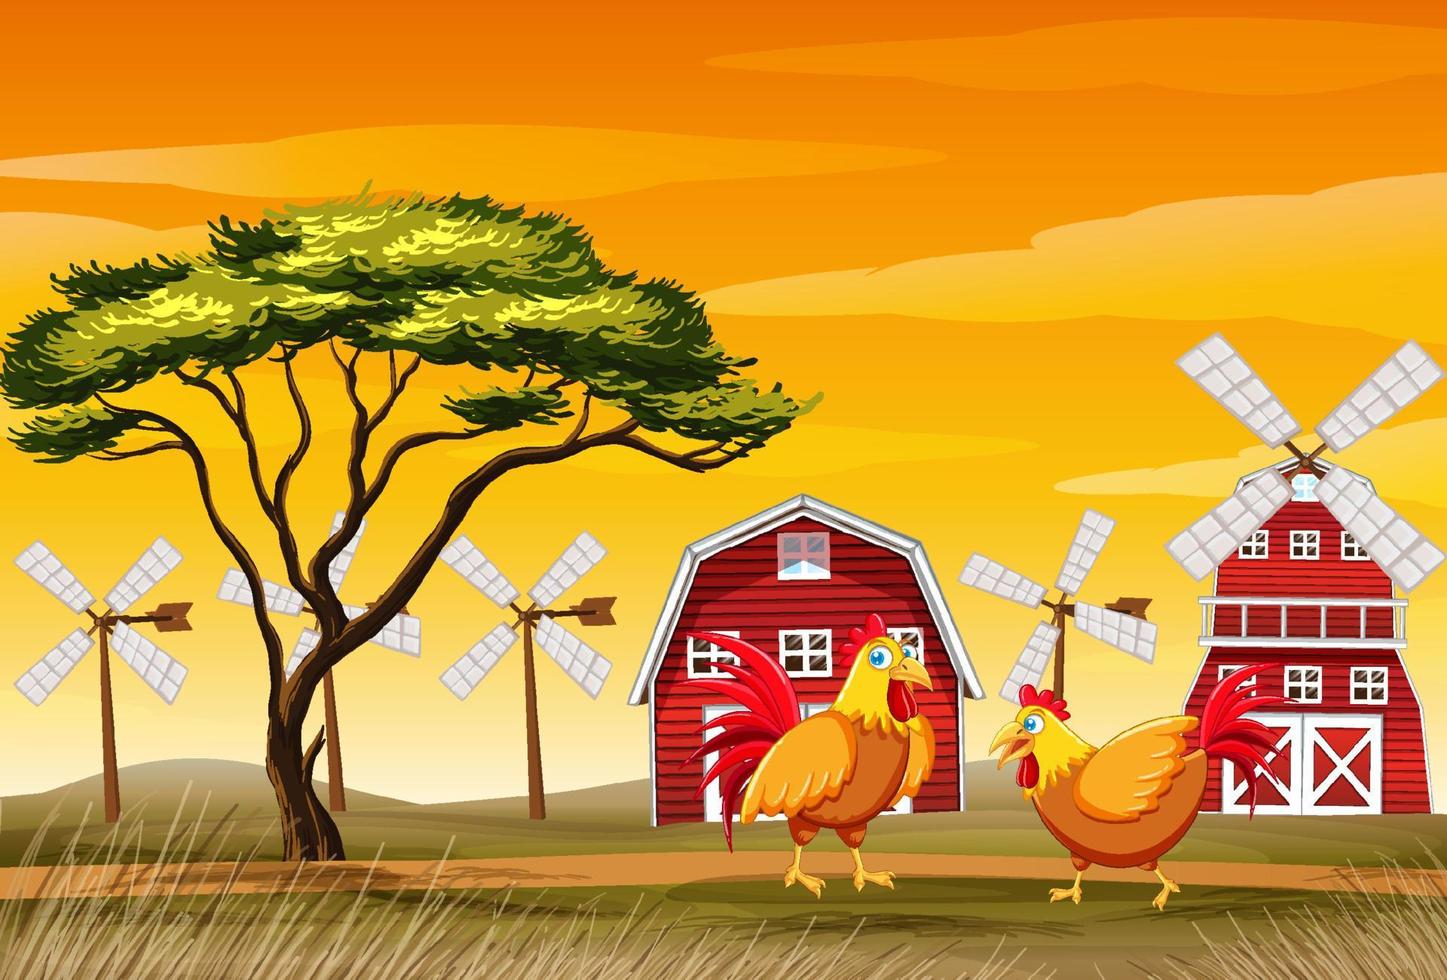 Farm scene with chickens in the field vector